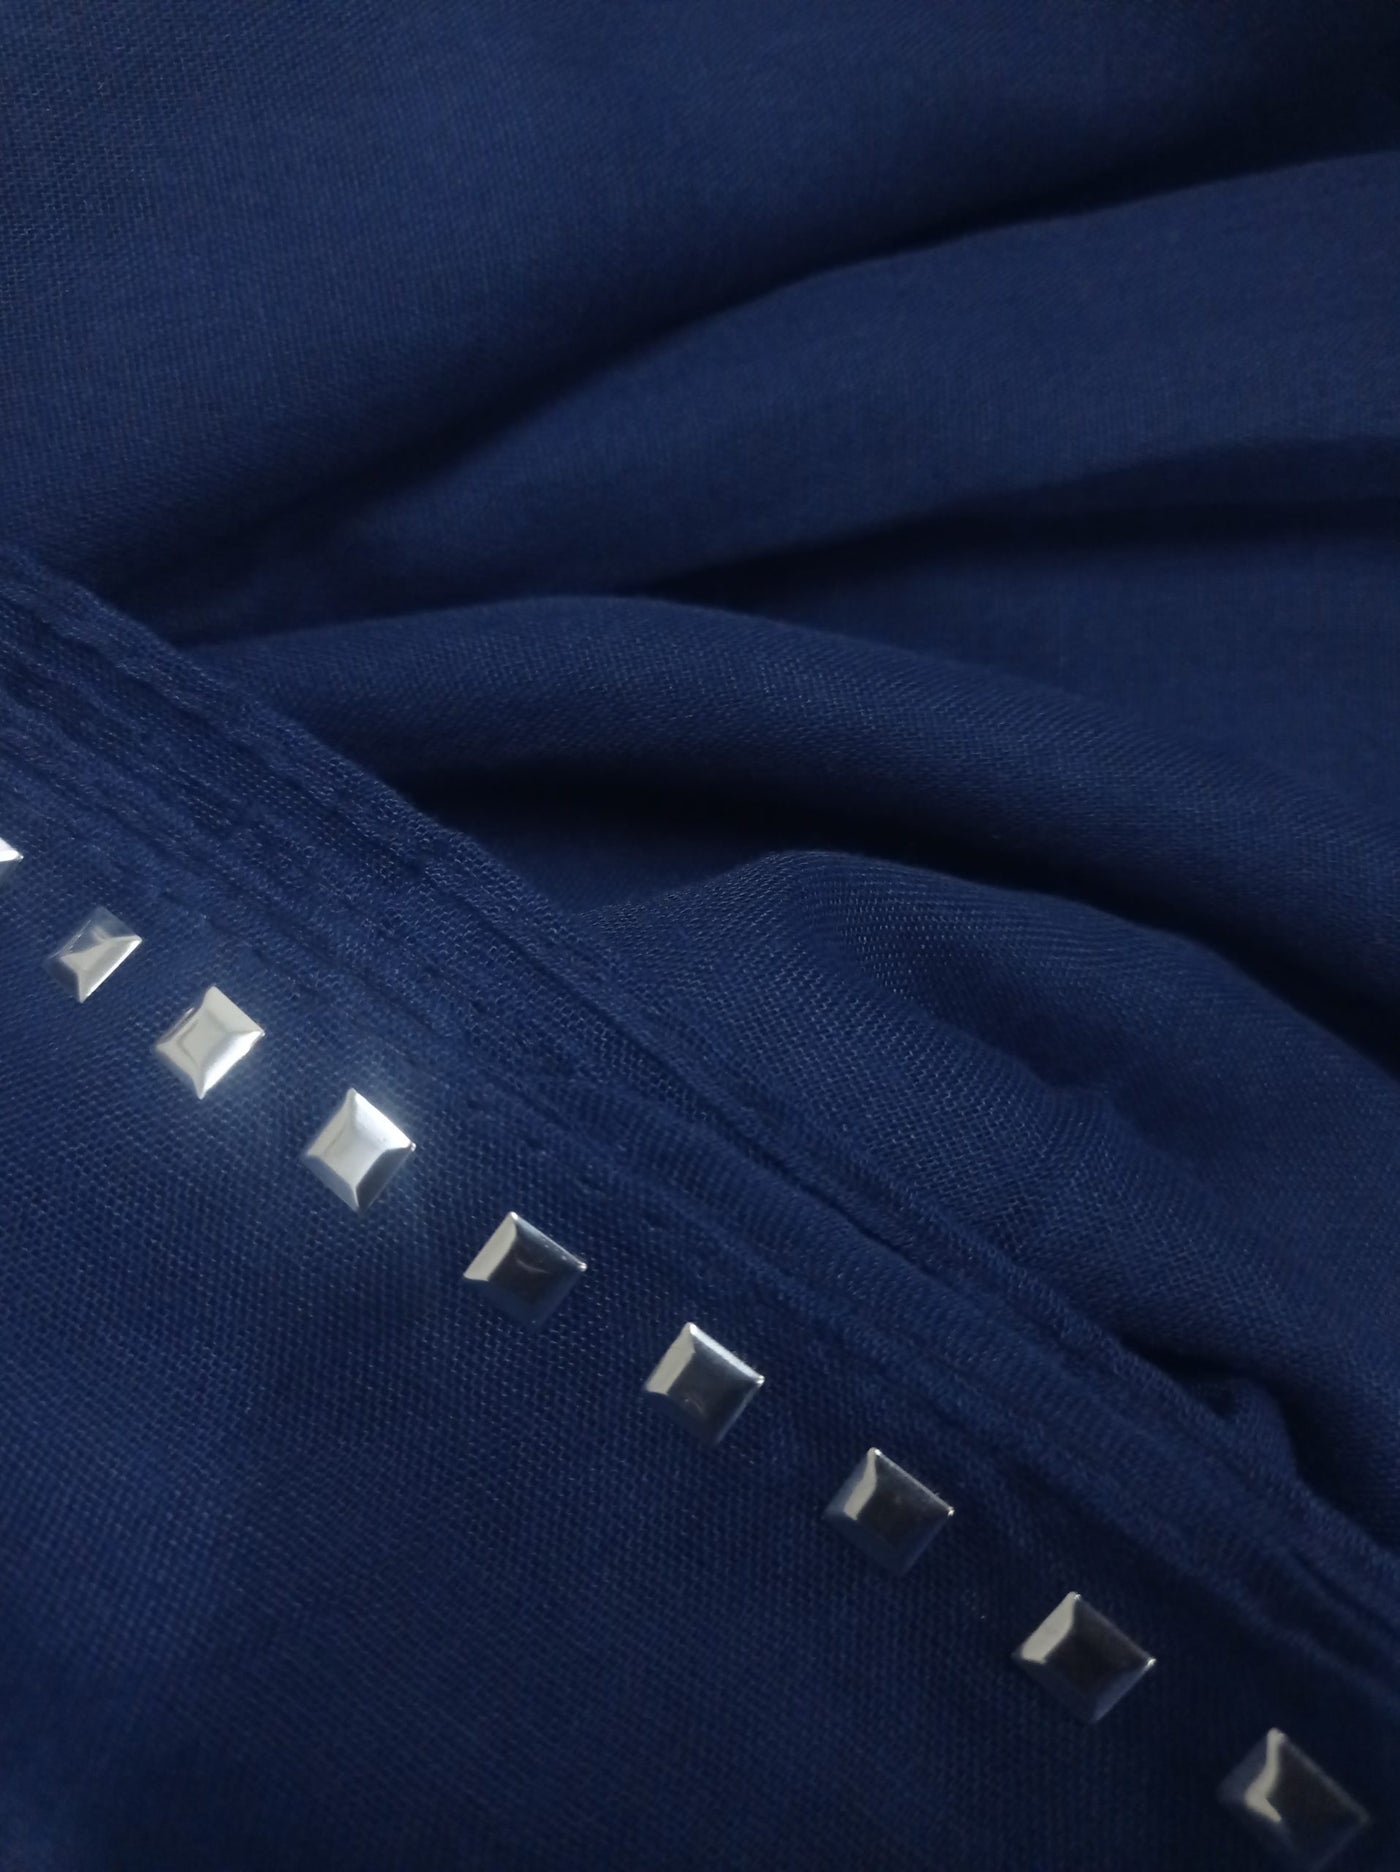 Studded Hijab - Navy Blue - Scarfs.pk #1 Online Hijab Store